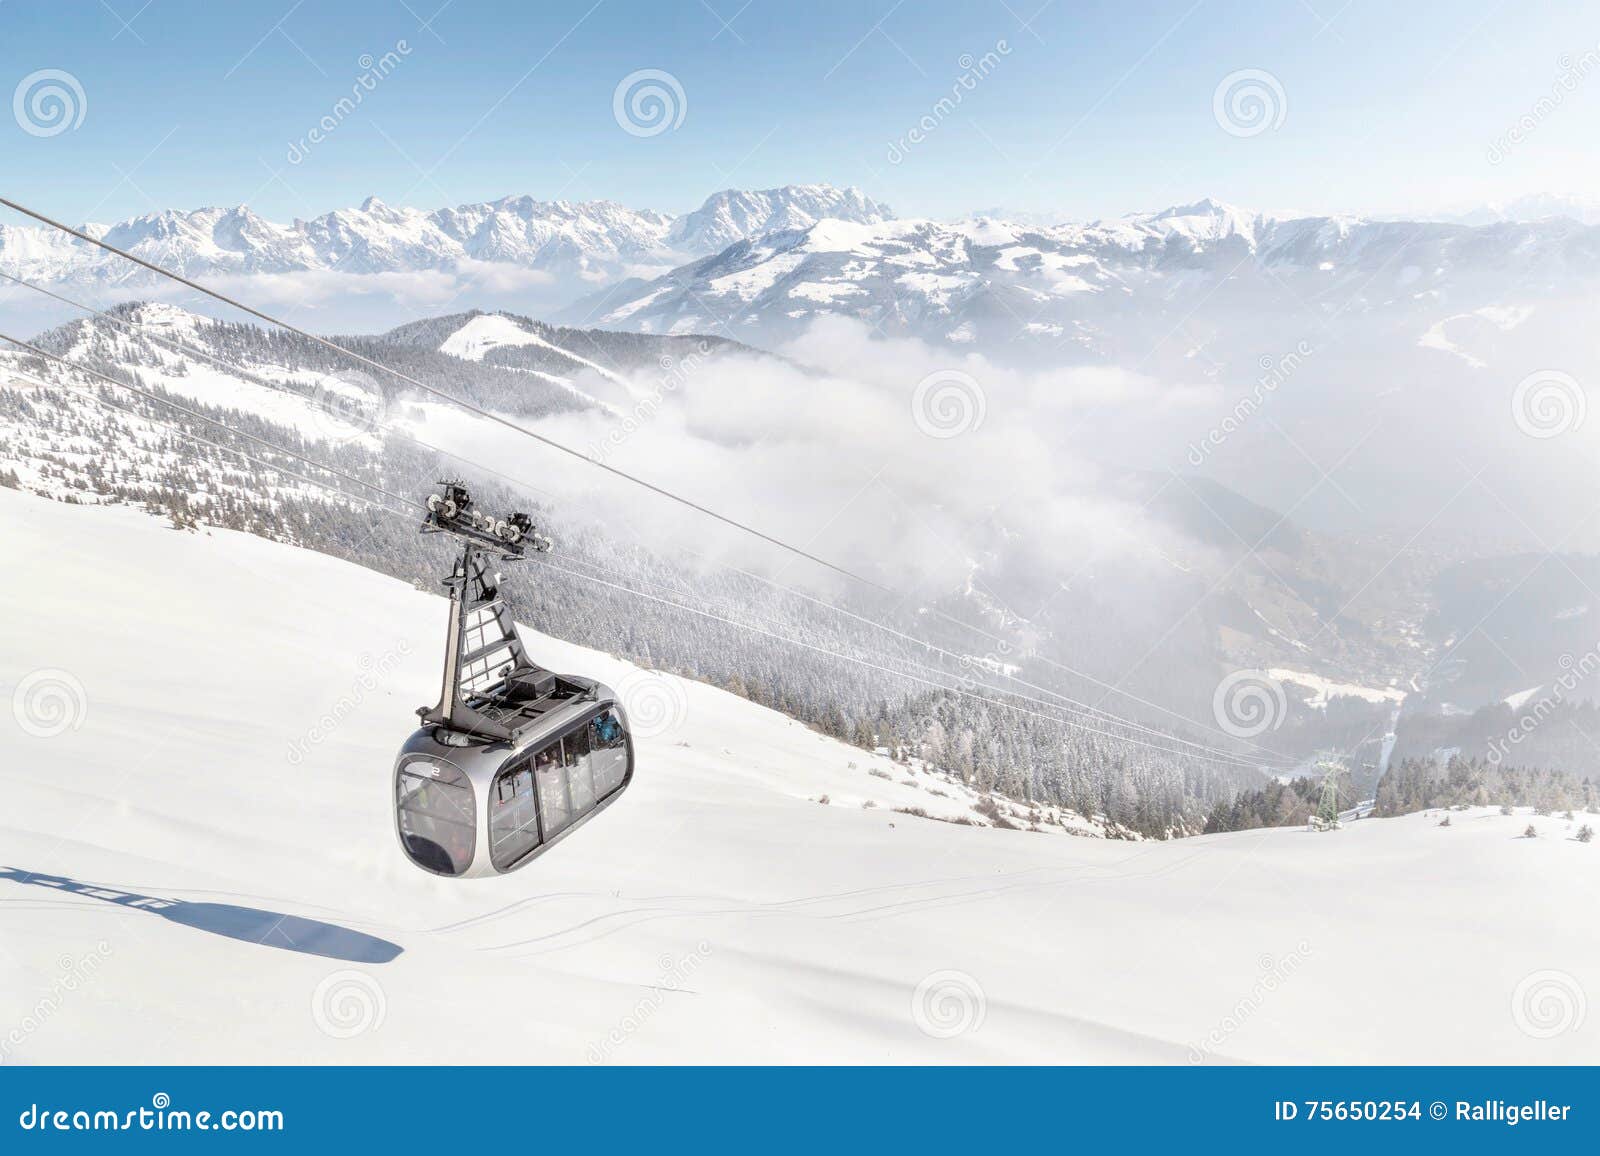 ski area zell am see/kaprun, austria